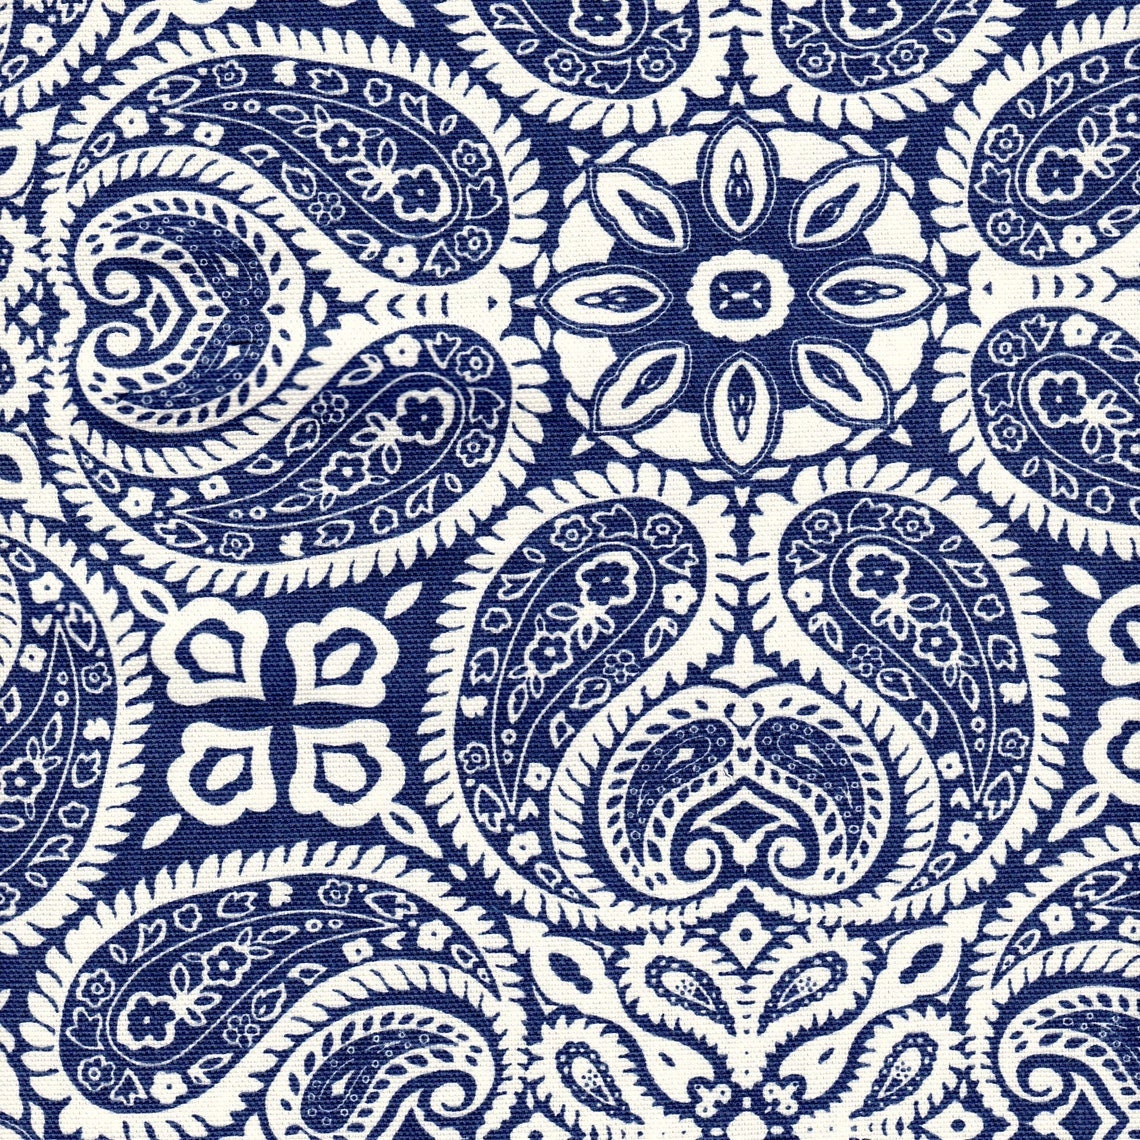 decorative pillows in tibi navy blue geometric paisley